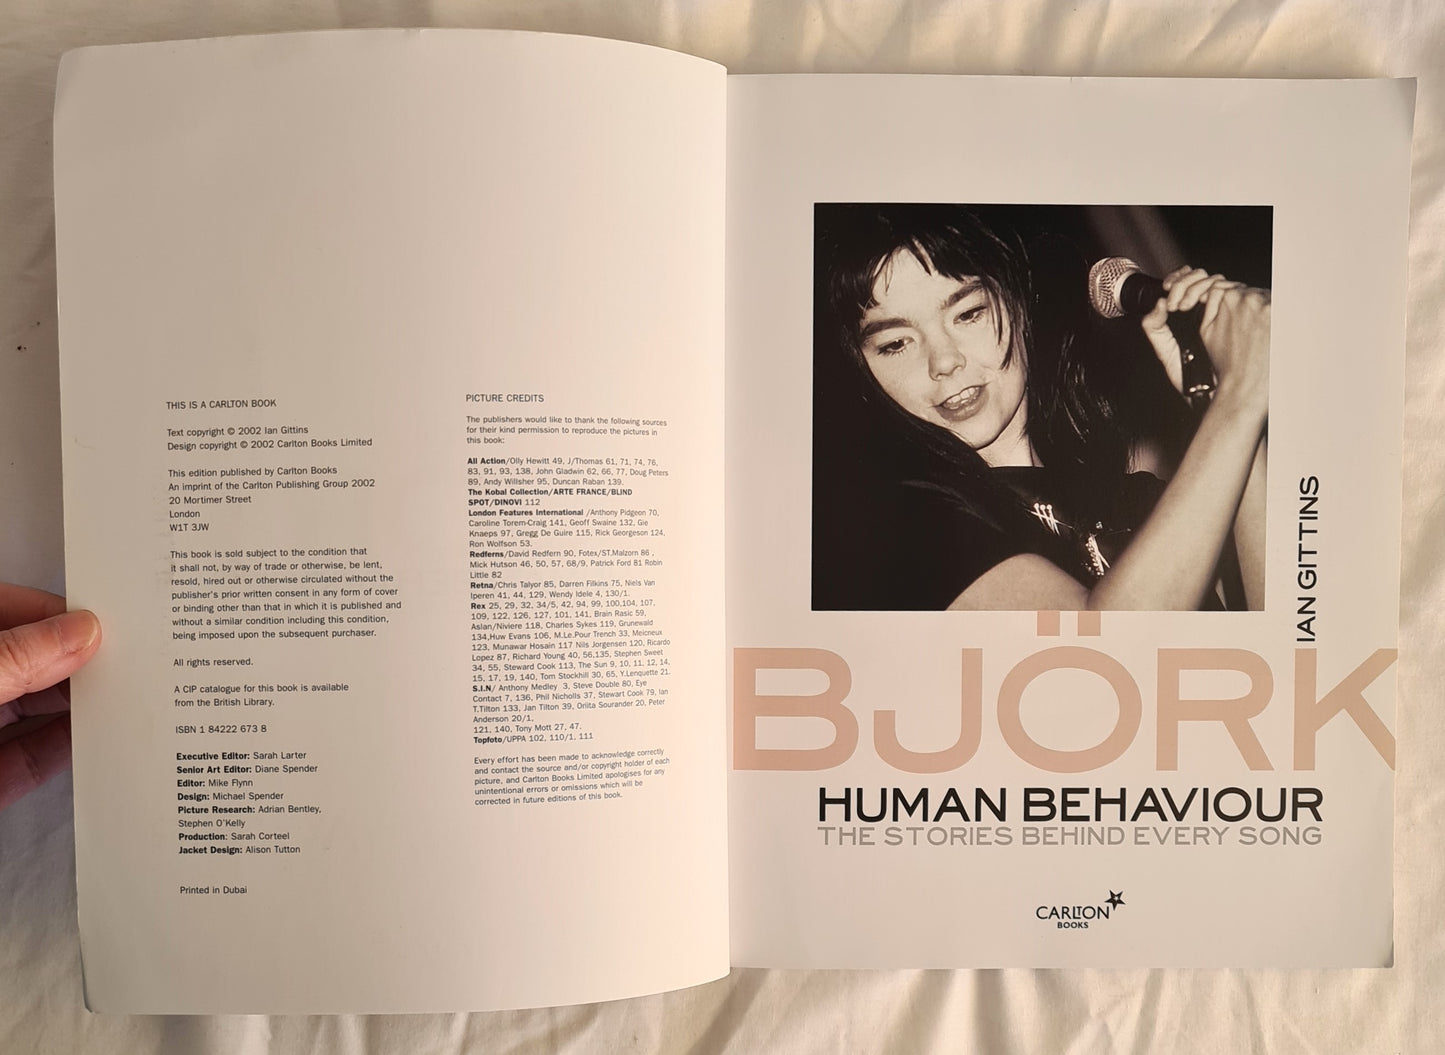 Bjork: Human Behaviour by Ian Gittins